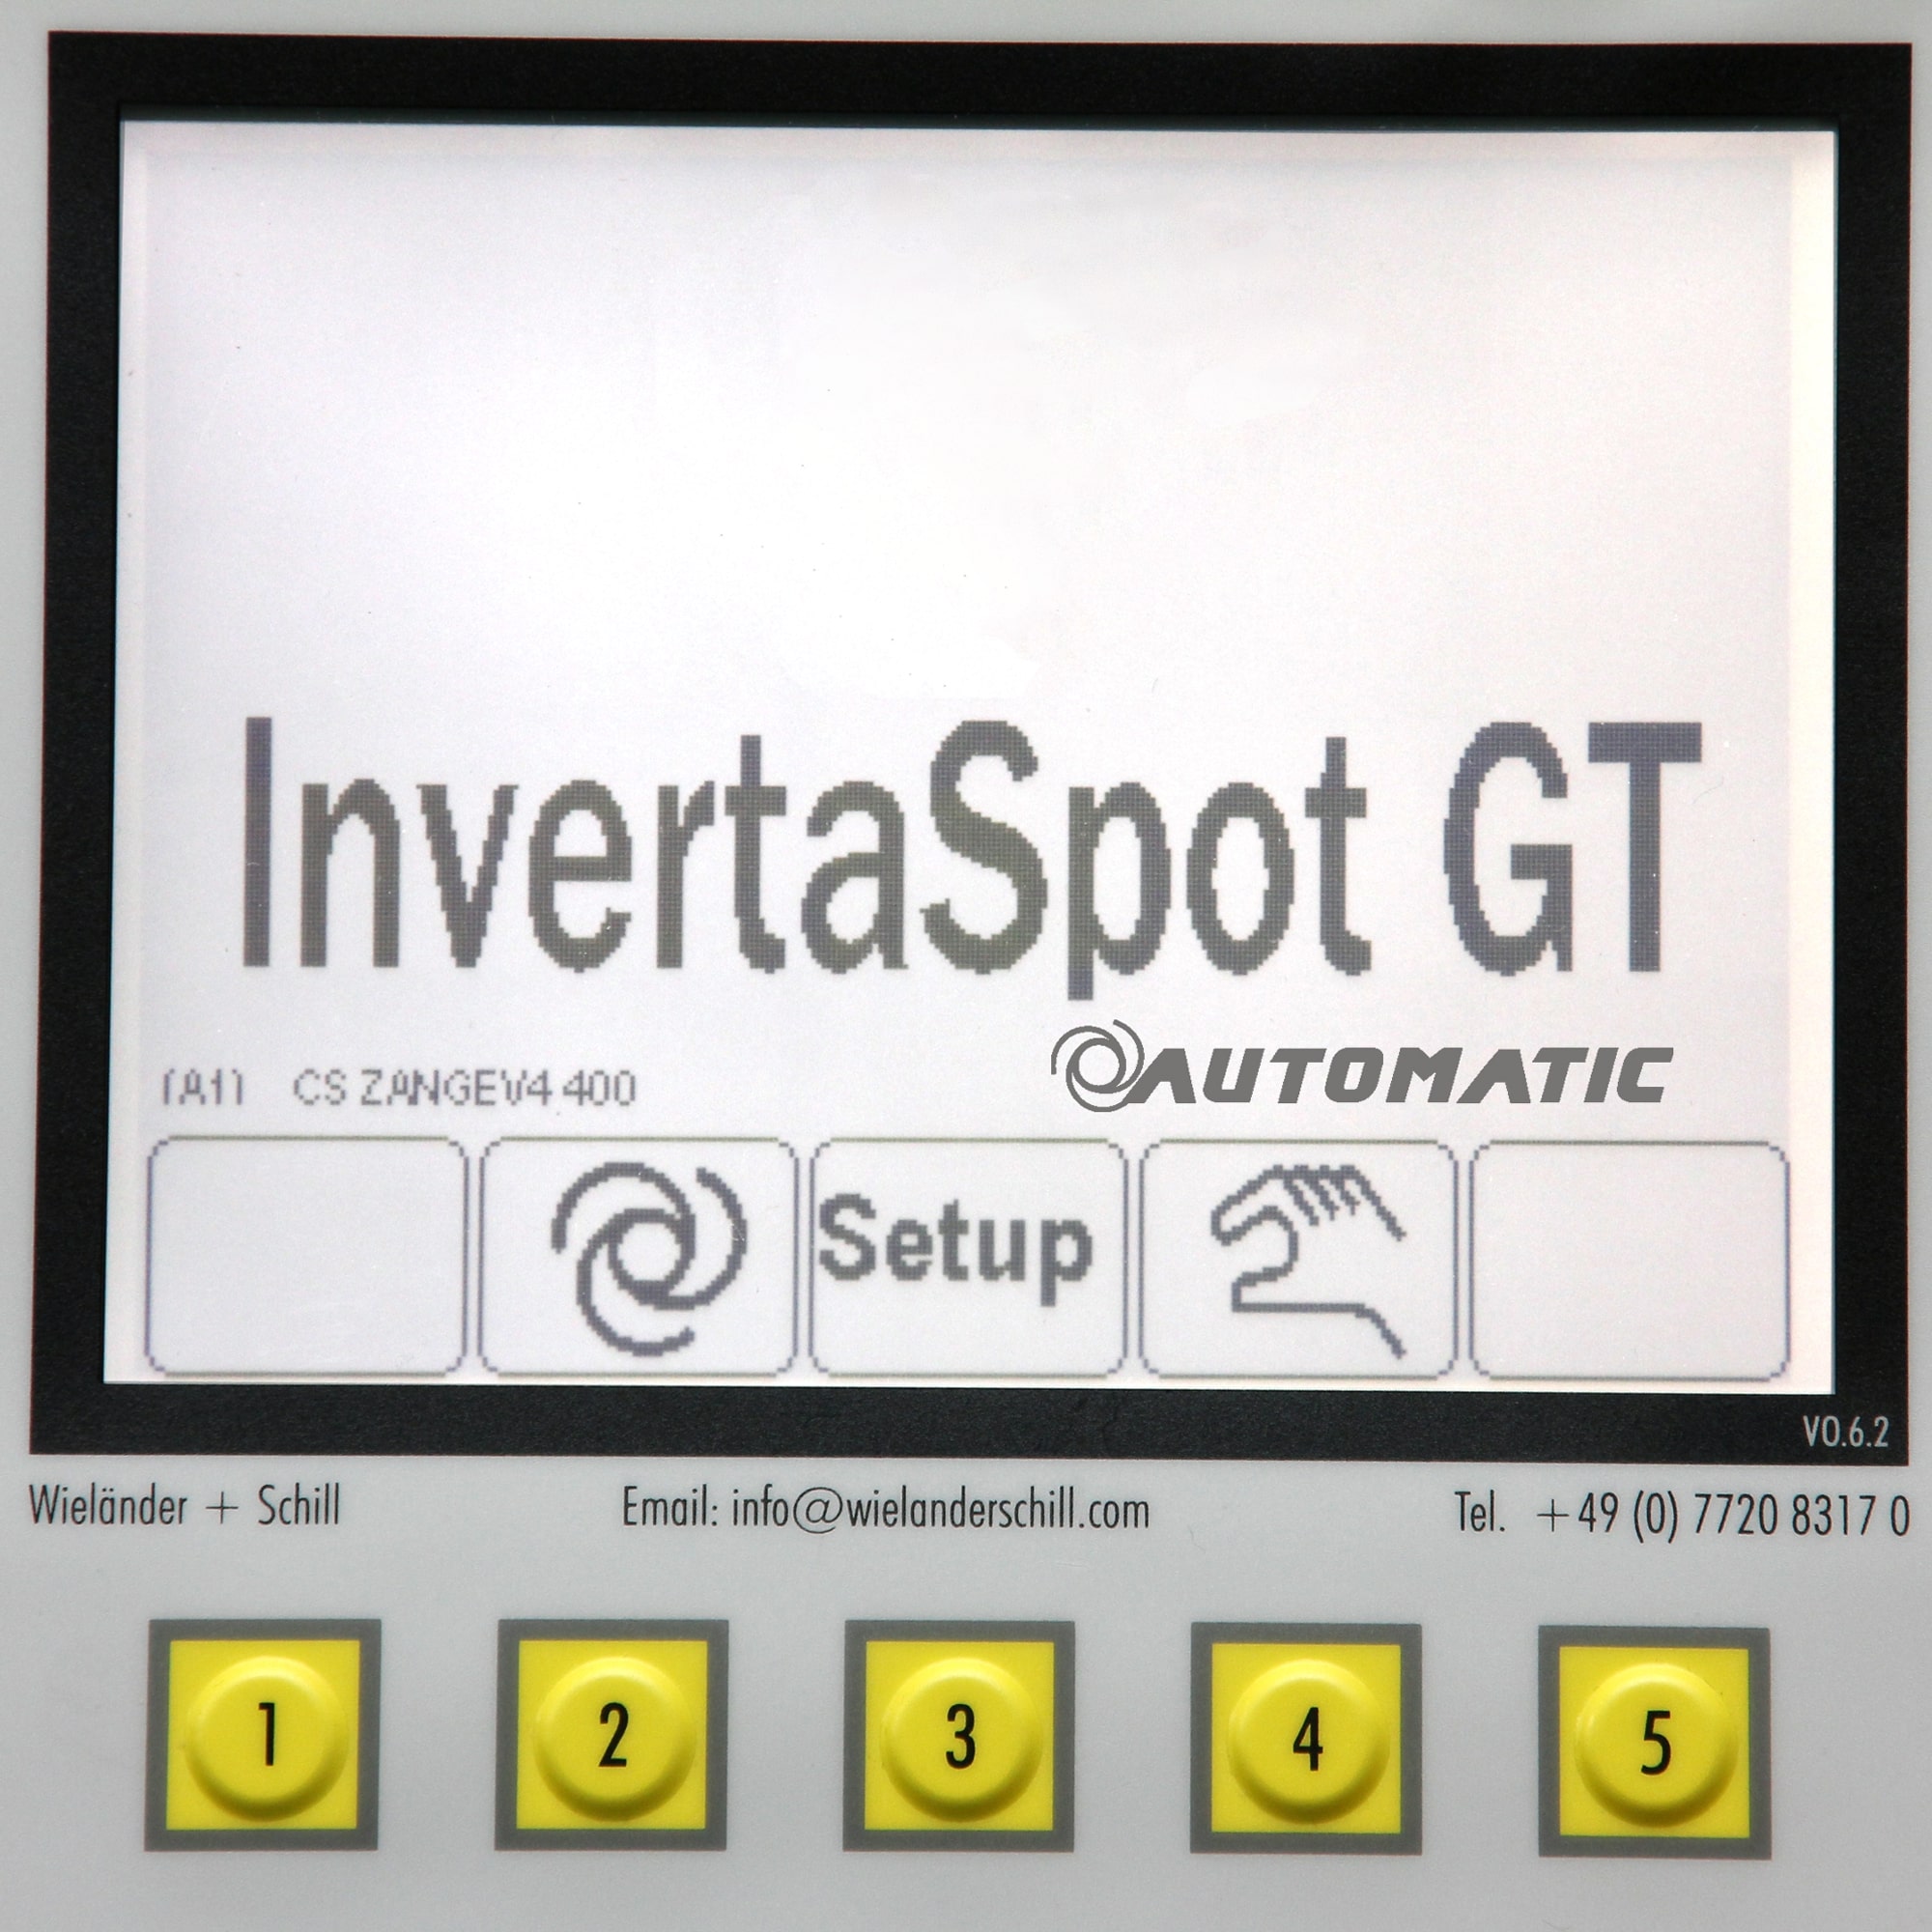 InvertaSpot GT-C AUTOMATIC